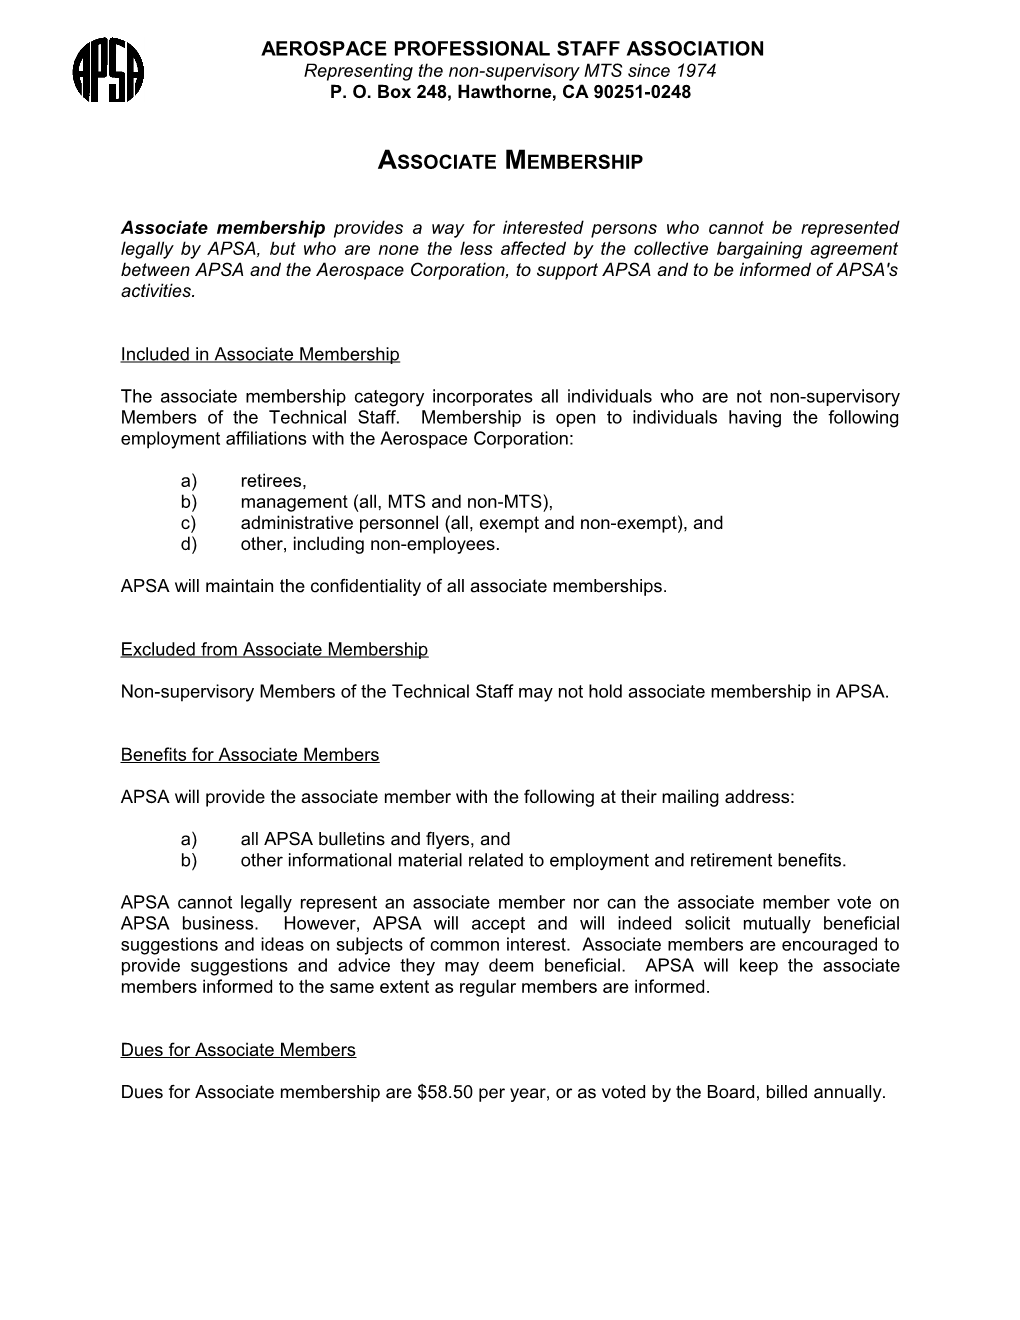 Associate Membership Invitation and Application